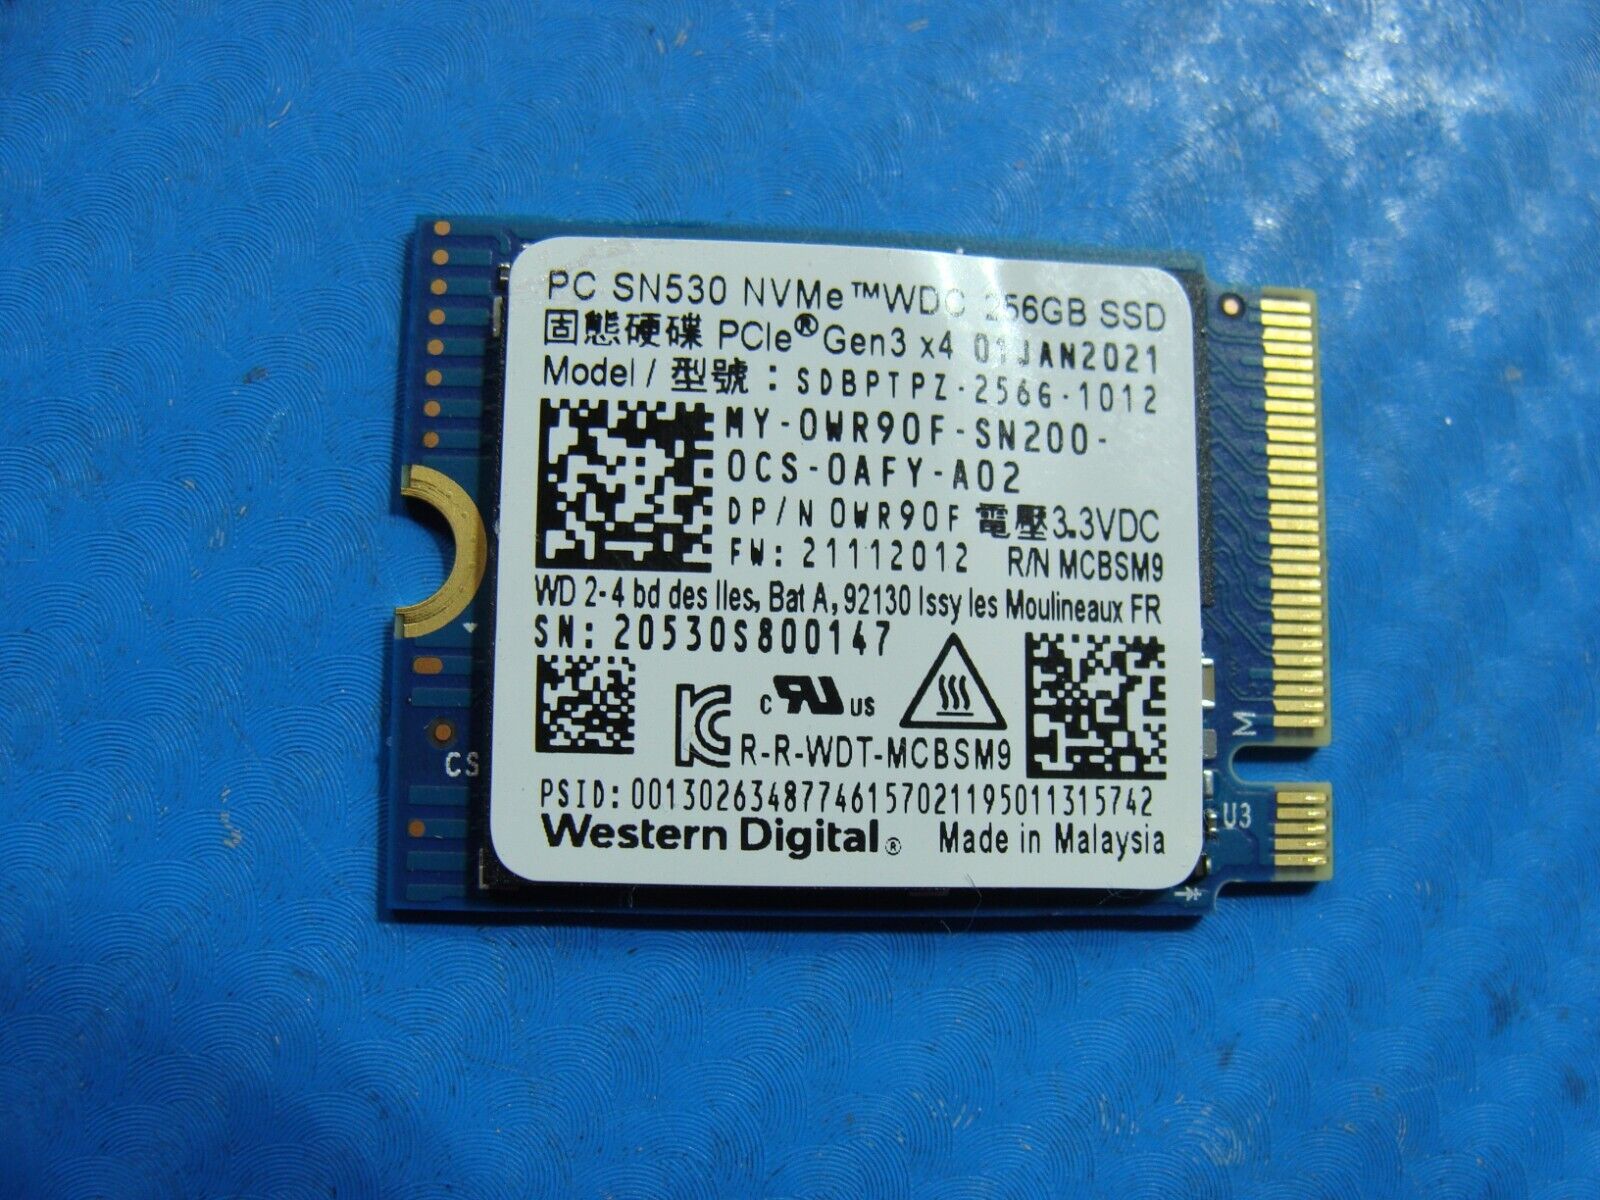 Dell 15 3501 WD NVMe M.2 256GB SSD Solid State Drive SDBPTPZ-256G-1012 WR90F